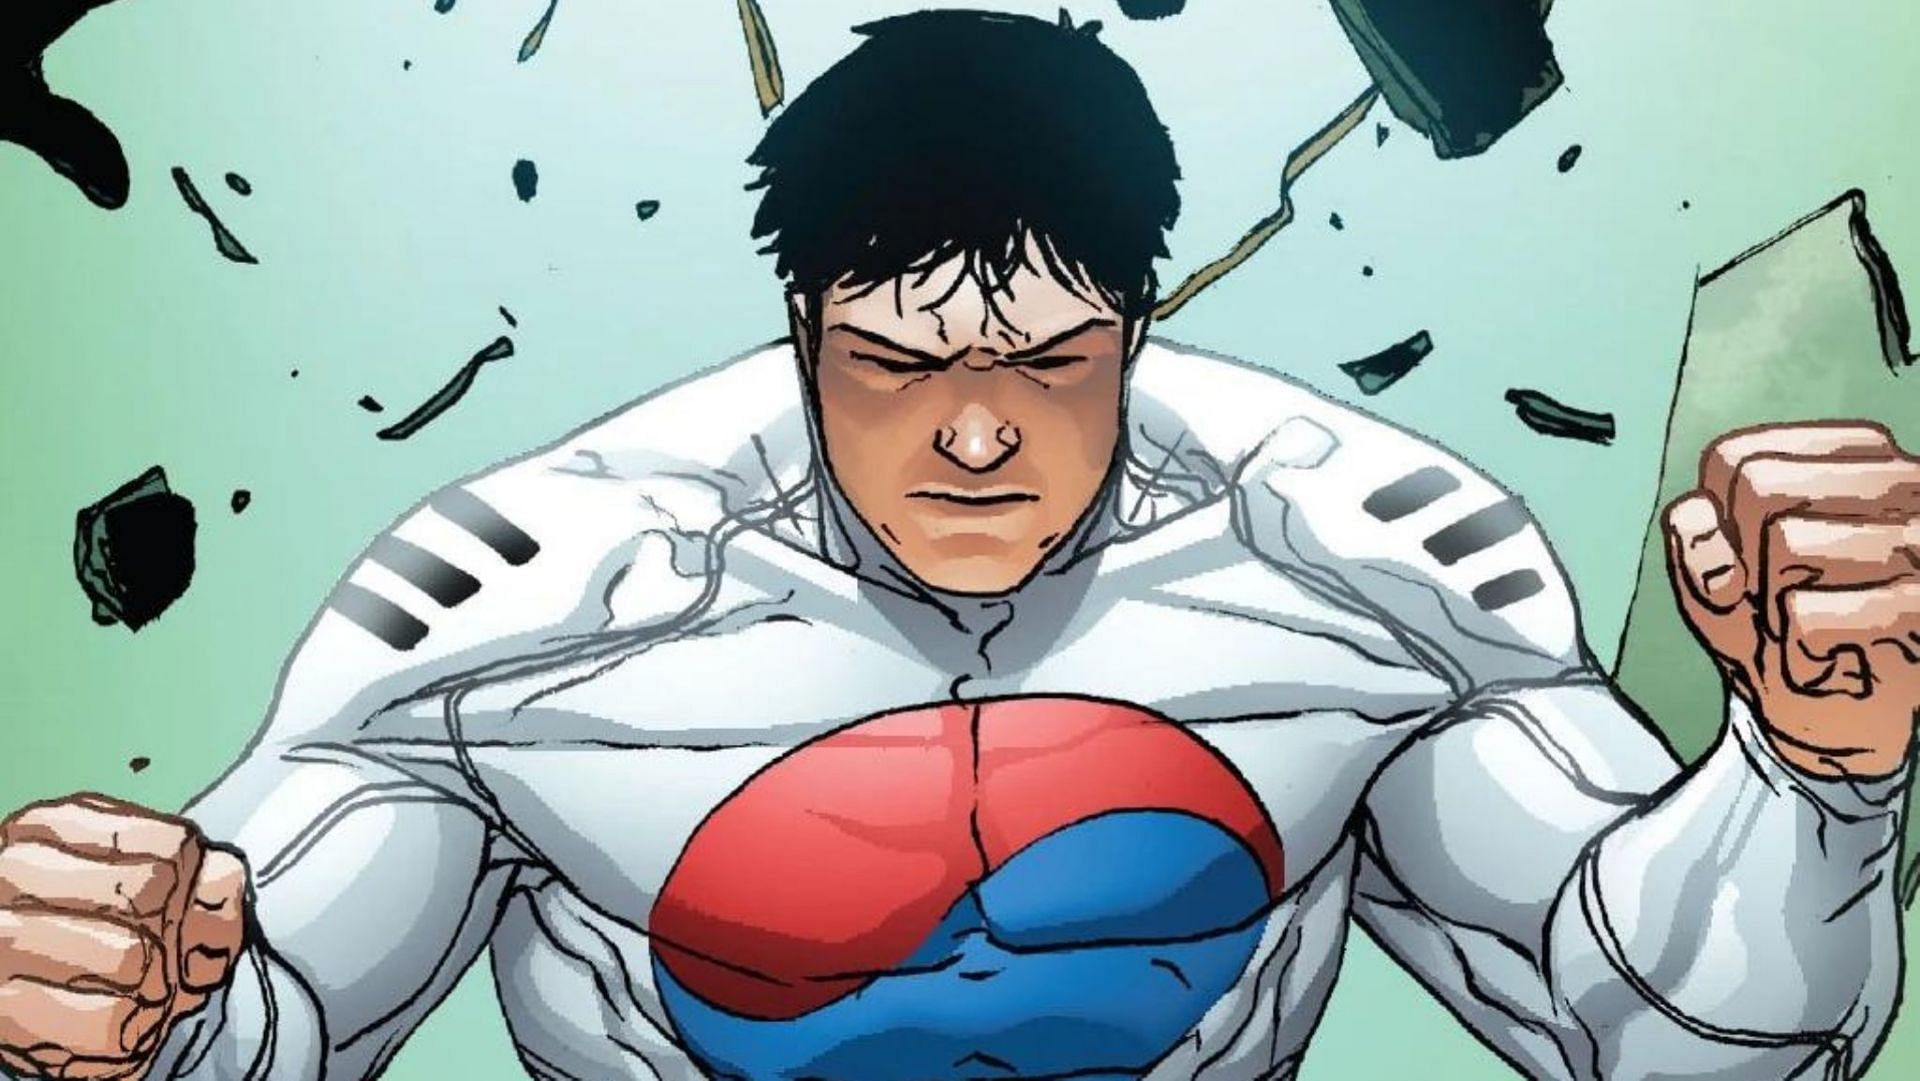 Who is Taegukgi? South Korea's national hero from Marvel